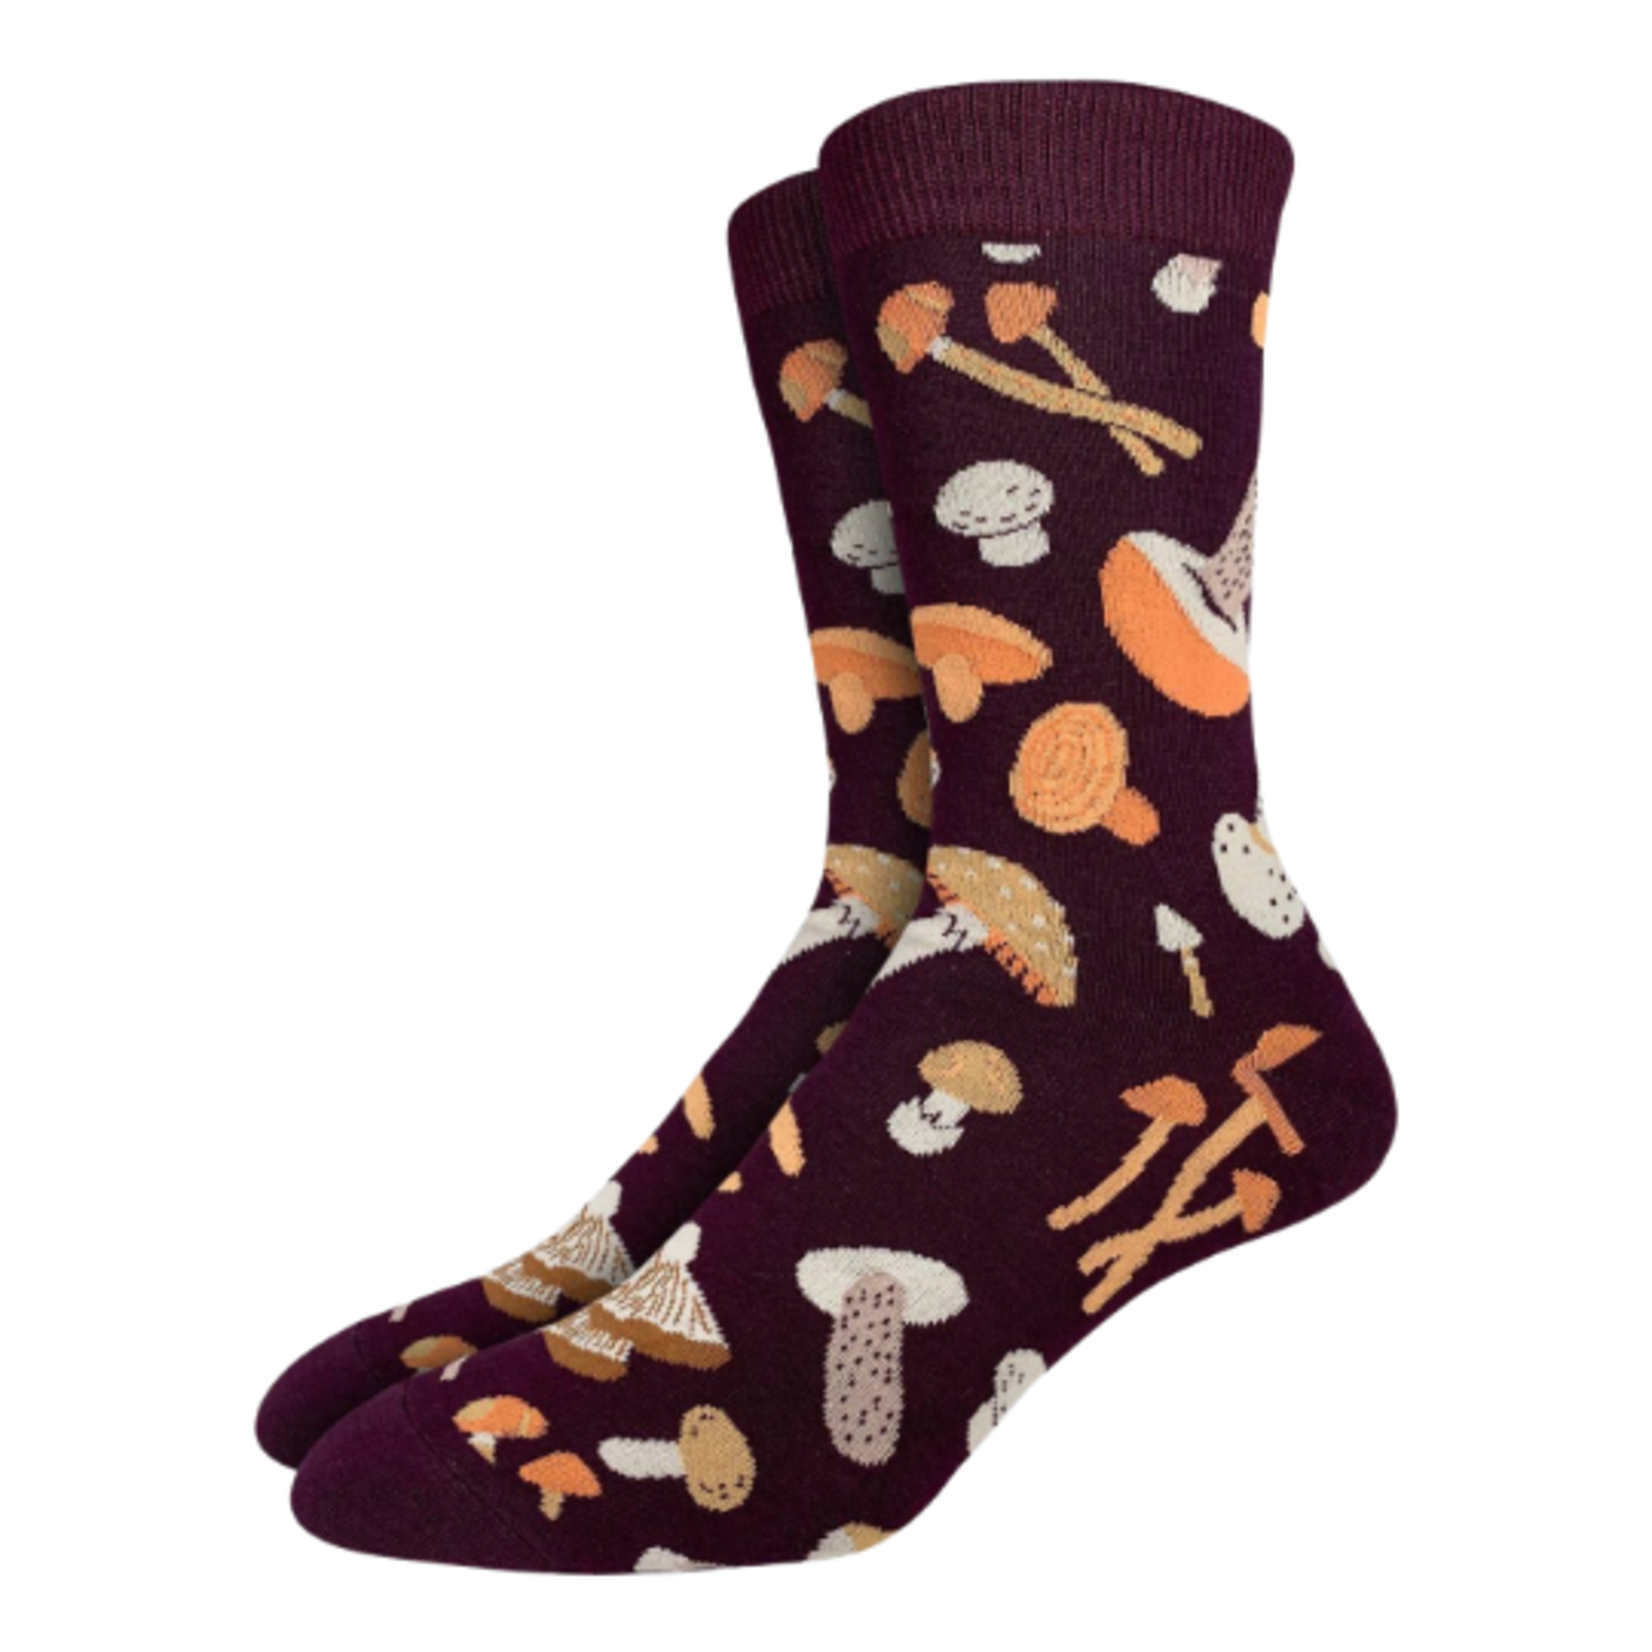 Mushroom Socks - Men’s Size 13 - 17